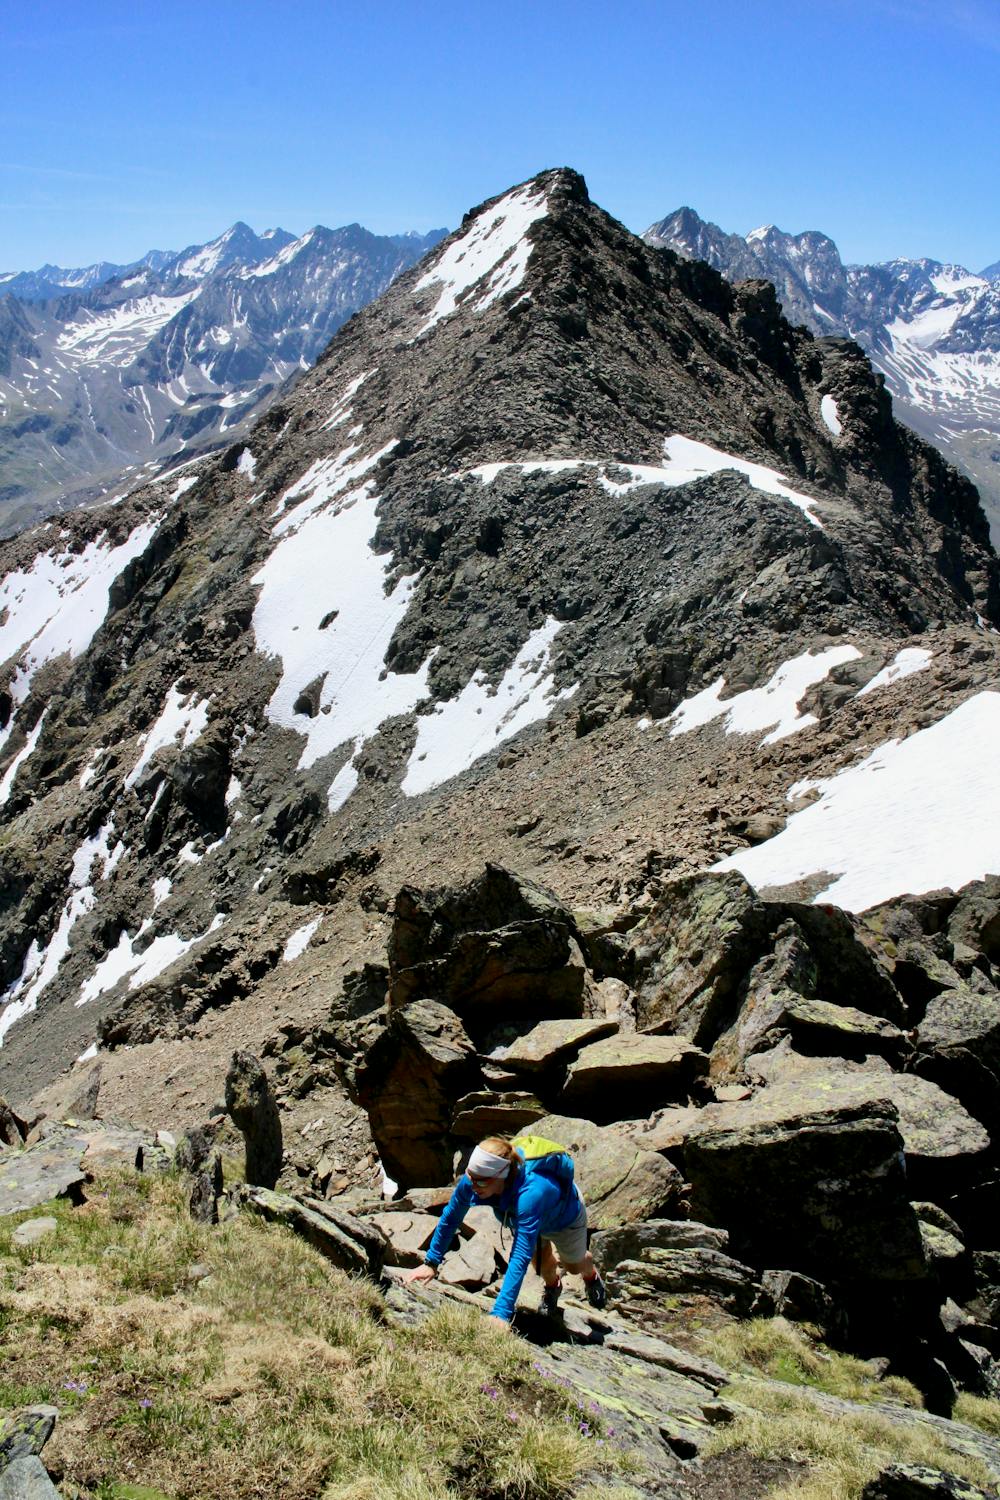 Typical terrain on the ridge